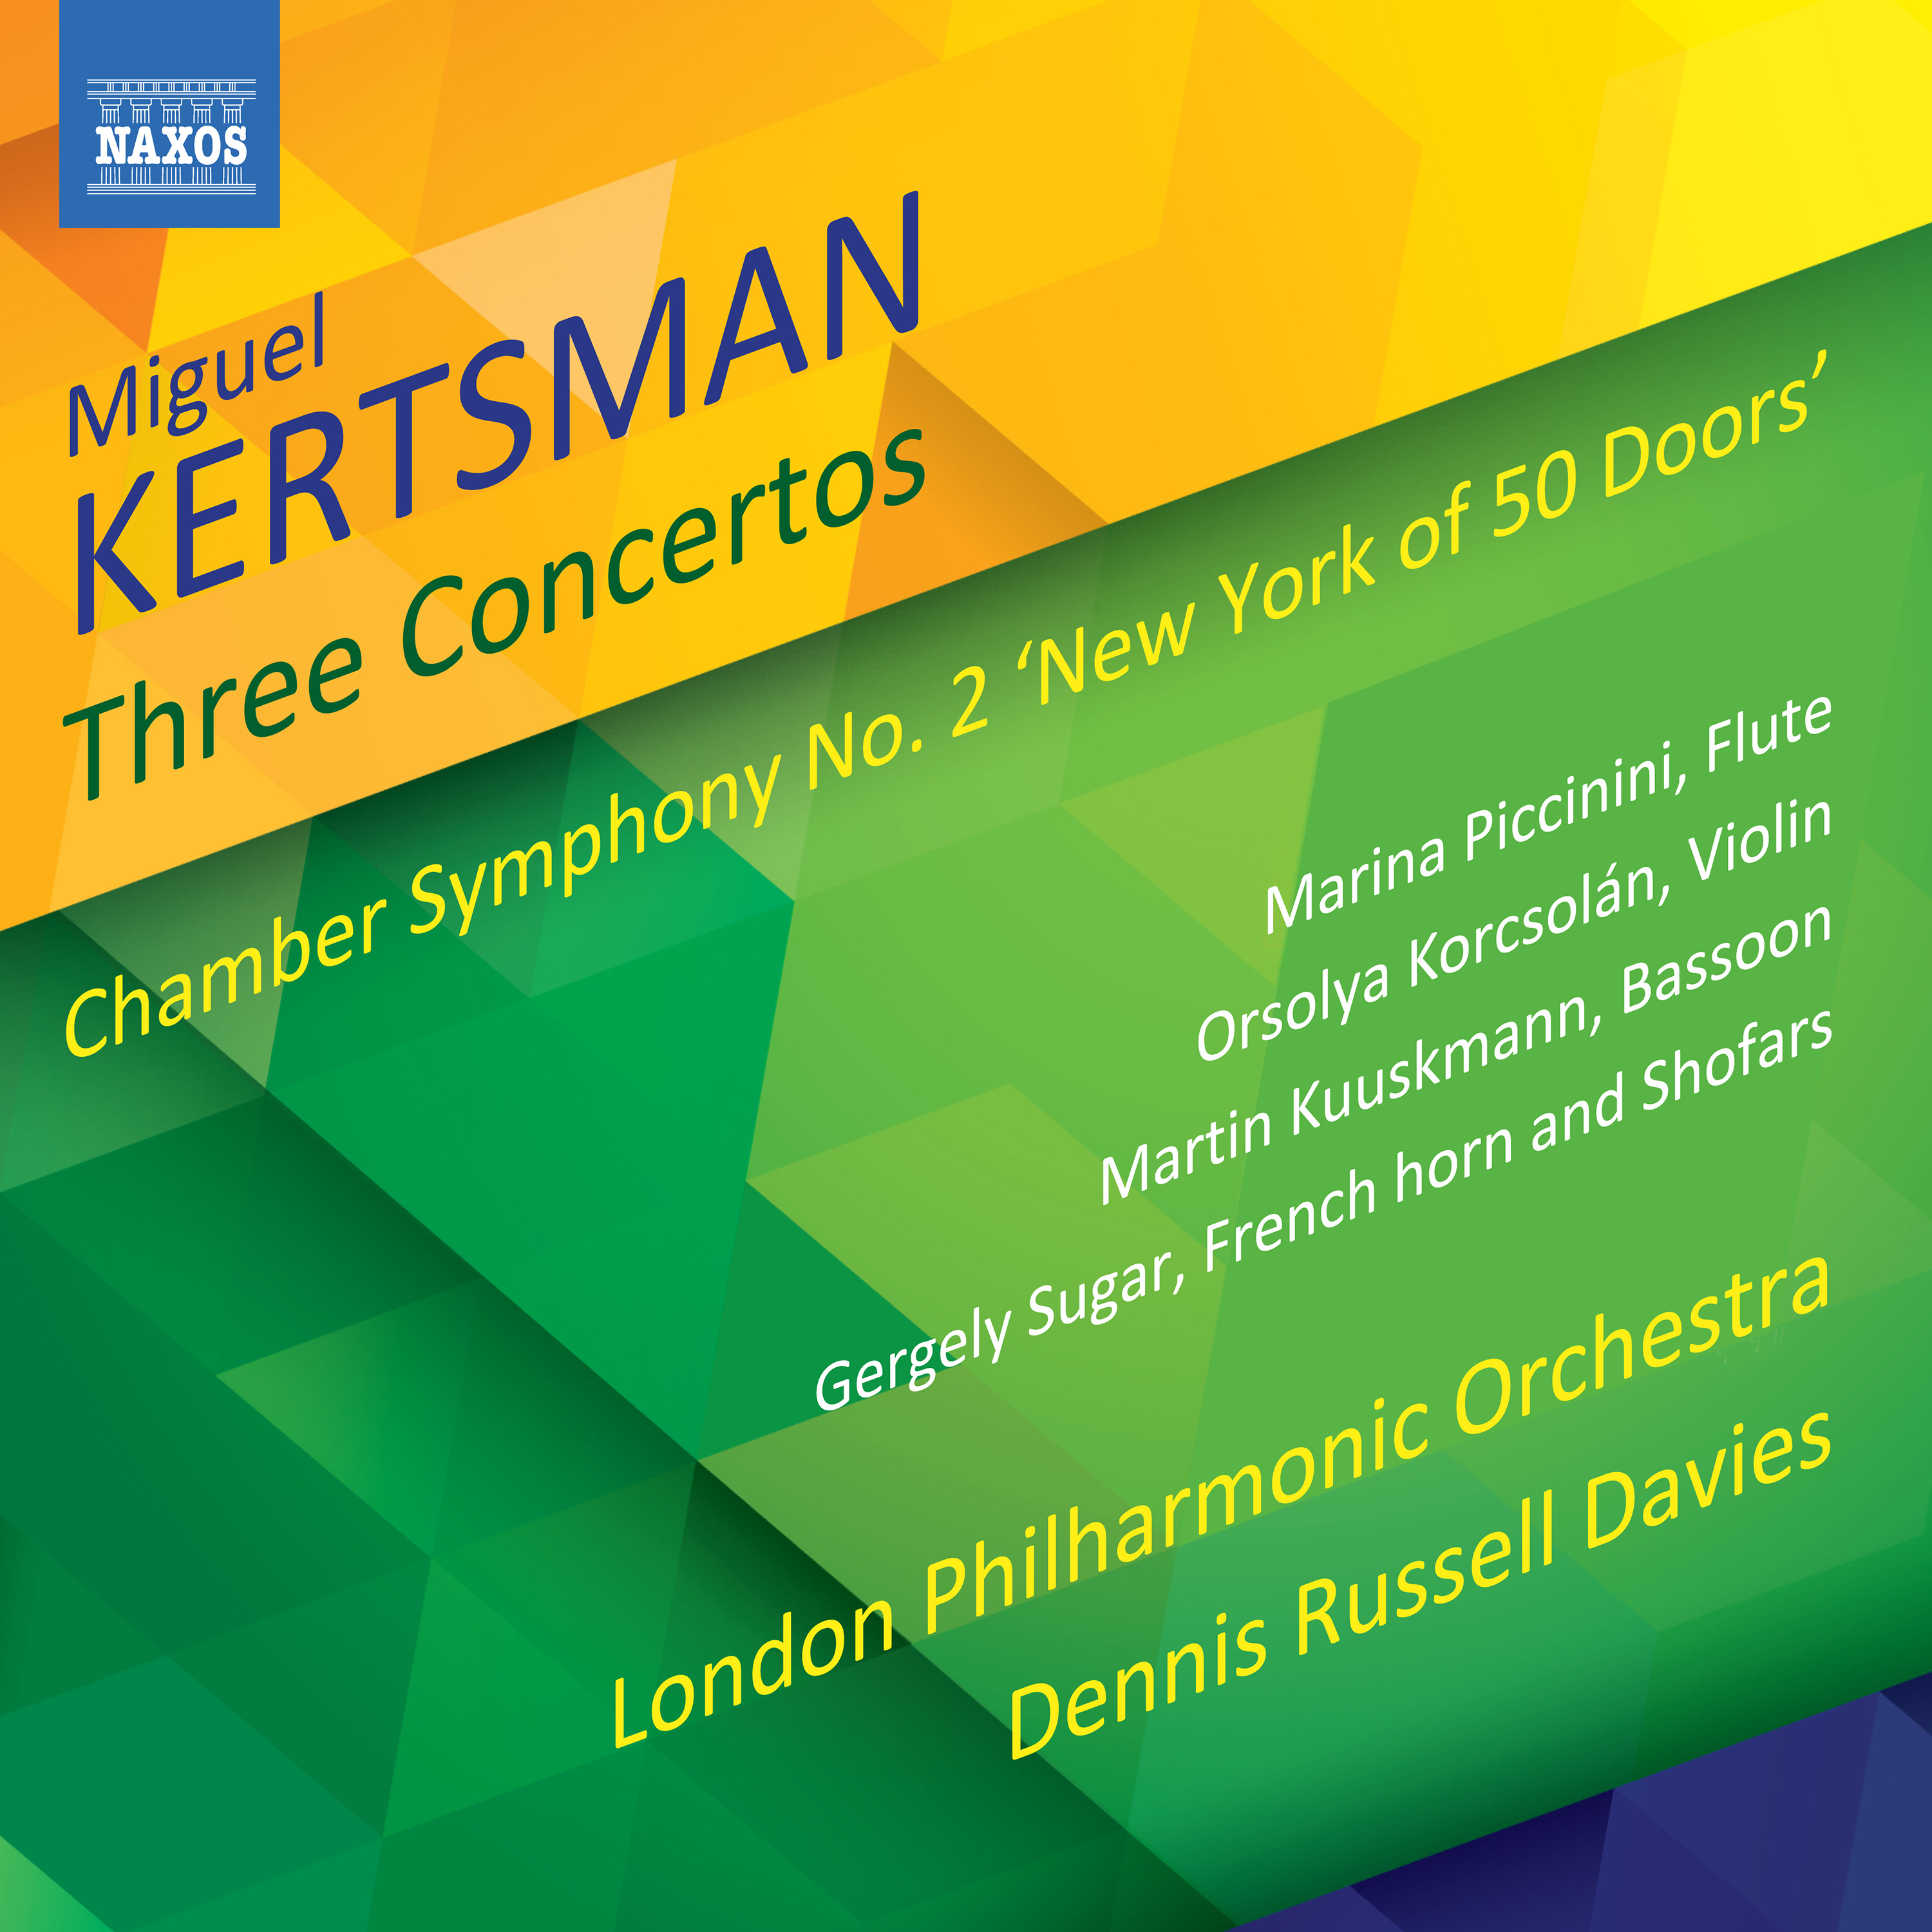 KERTSMAN, M.: Concertos  Chamber Symphony No. 2, " New York of 50 Doors" Piccinini, Korcsola n, Kuuskmann, London Philharmonic, D. R. Davies